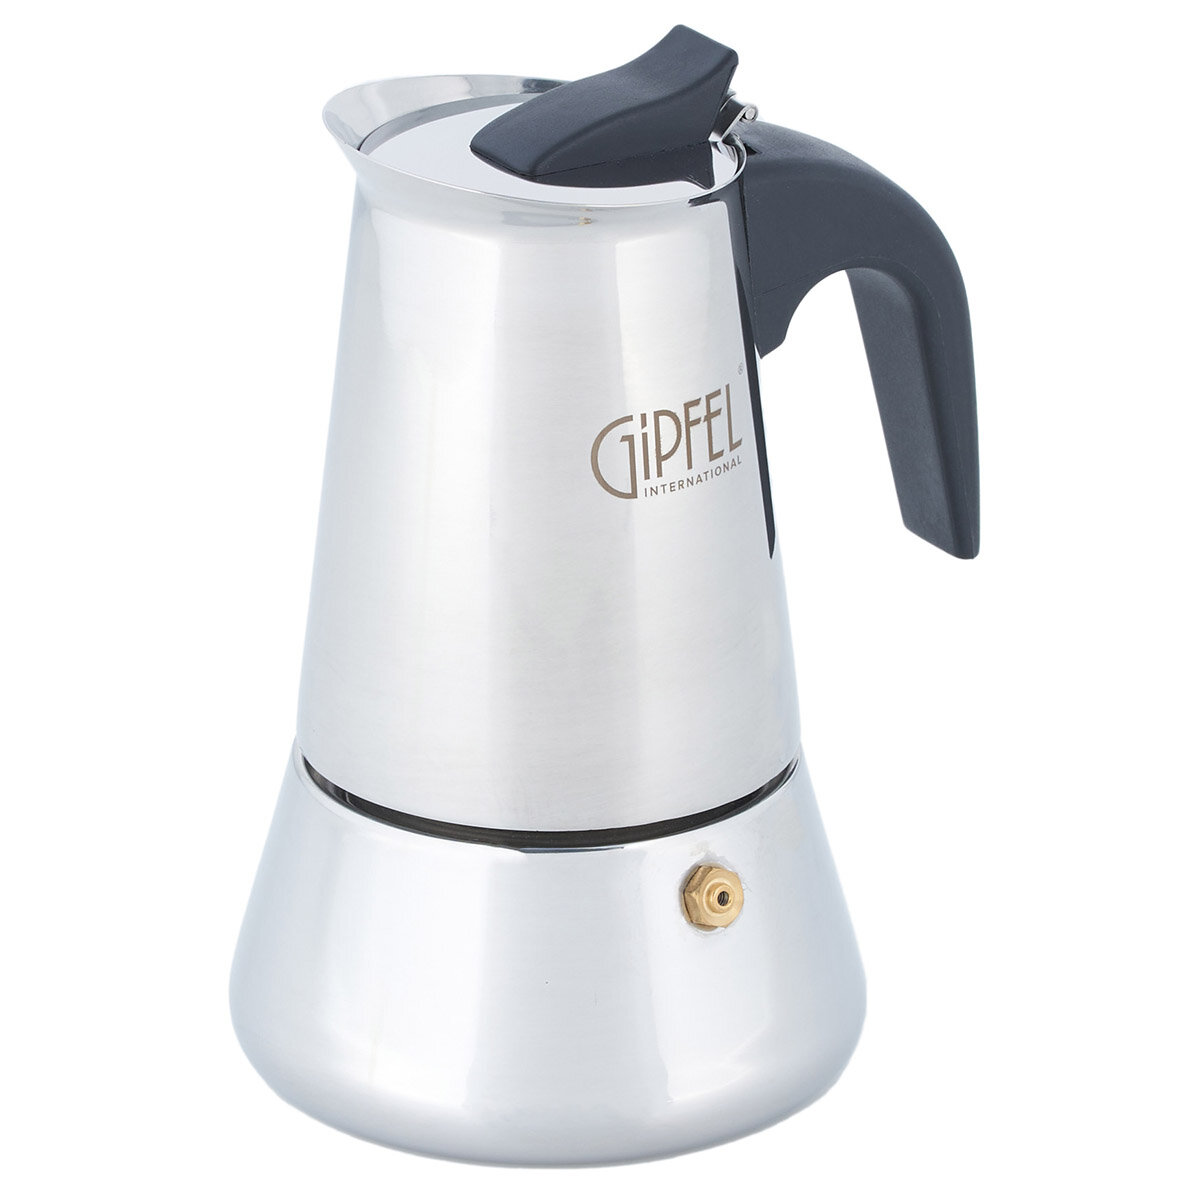 Гейзерная кофеварка GIPFEL 5325 IRIS 13,2х16,3см/200мл